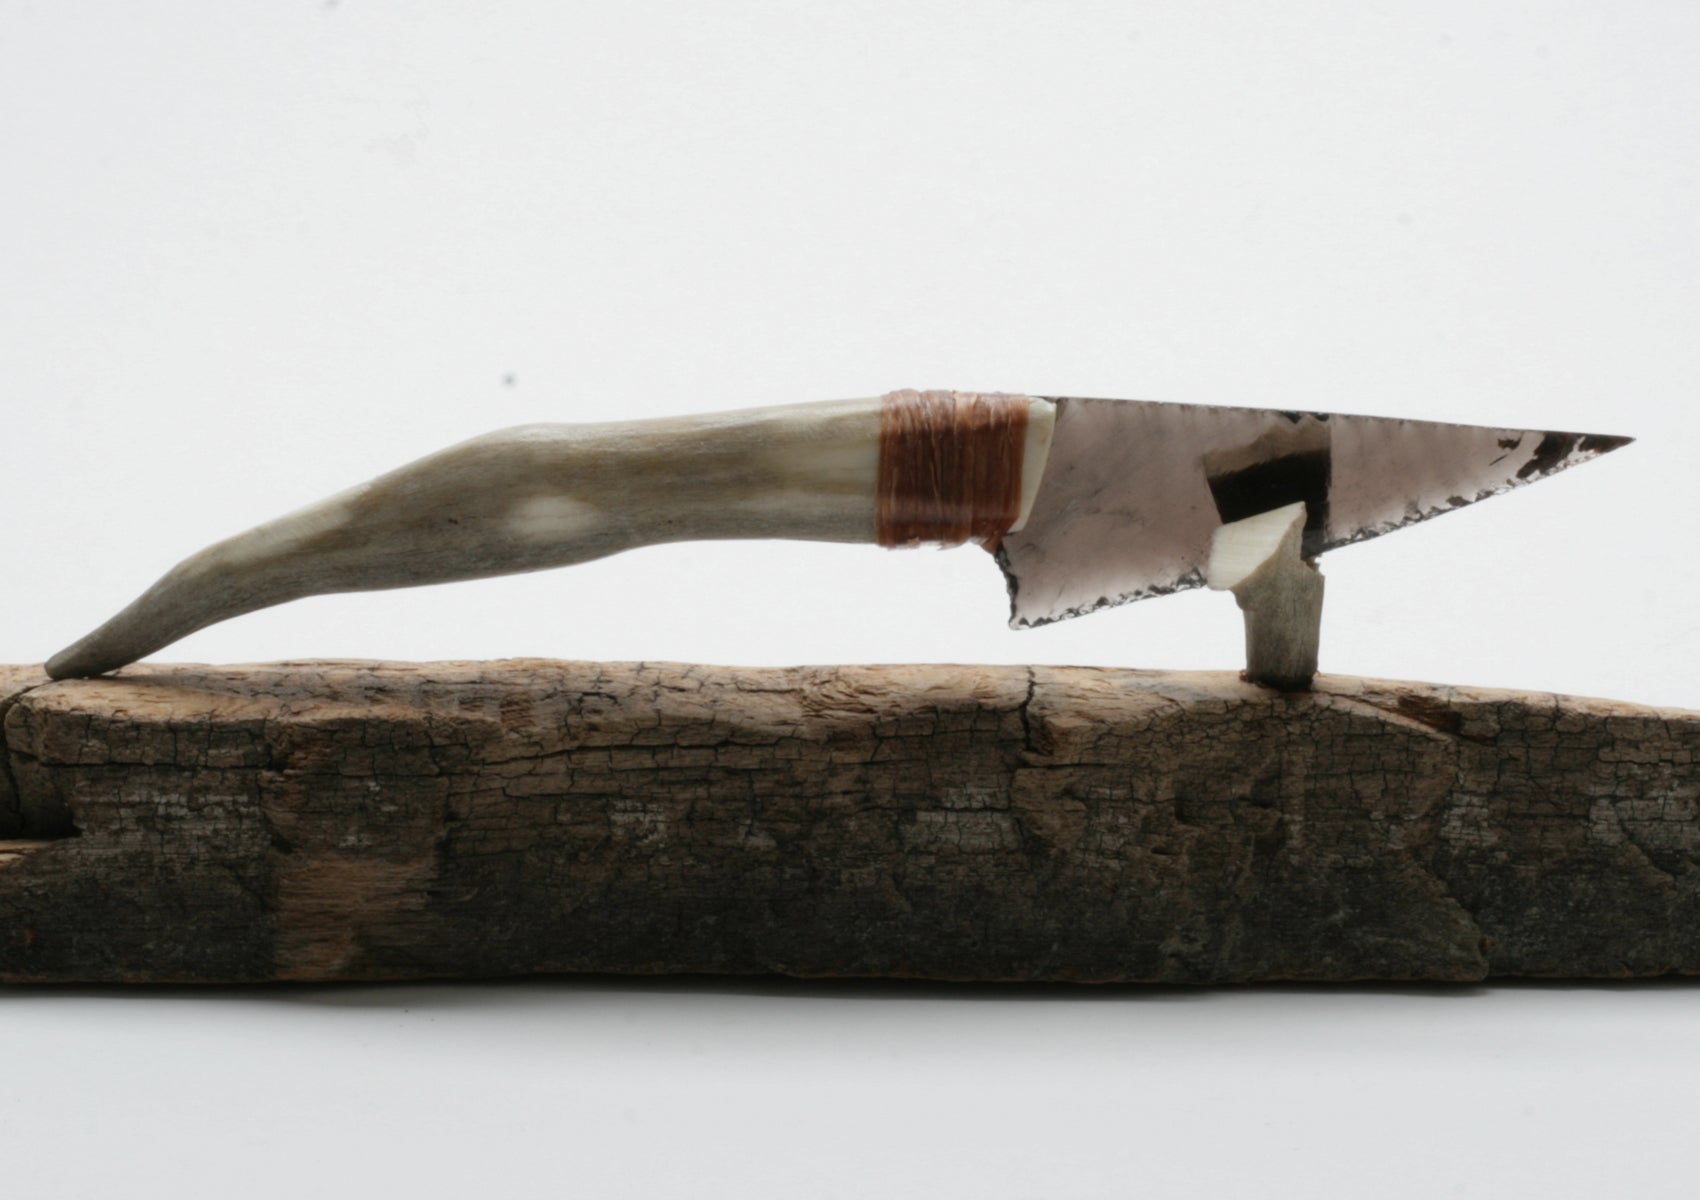 Tranparent Obsidian Knife with Deer Antler Handle